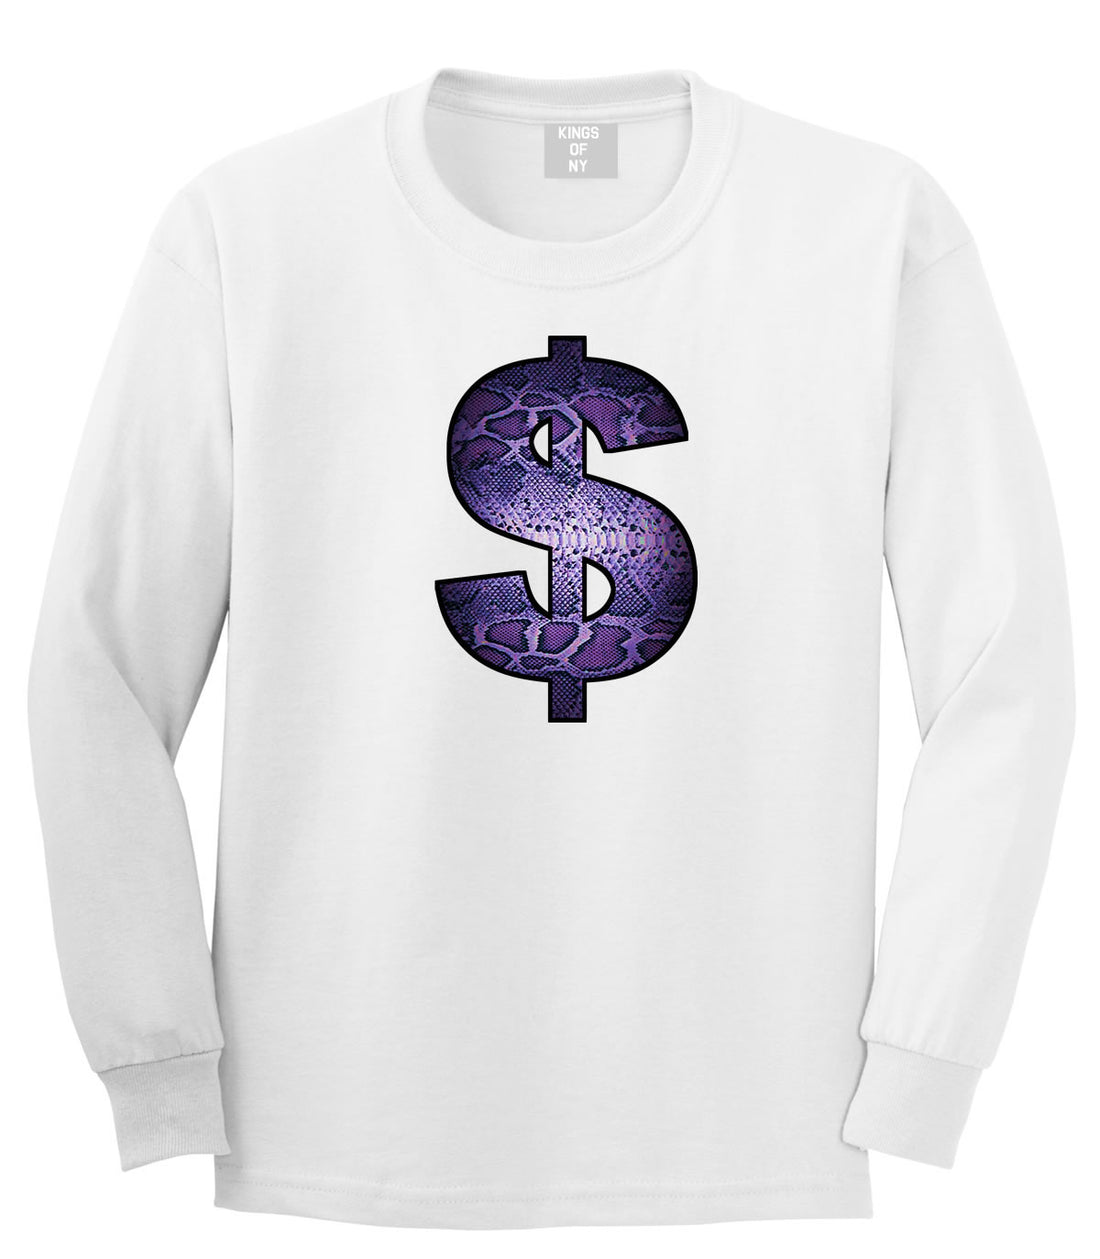 Snakeskin Money Sign Purple Animal Print Long Sleeve Boys Kids T-Shirt in White by Kings Of NY